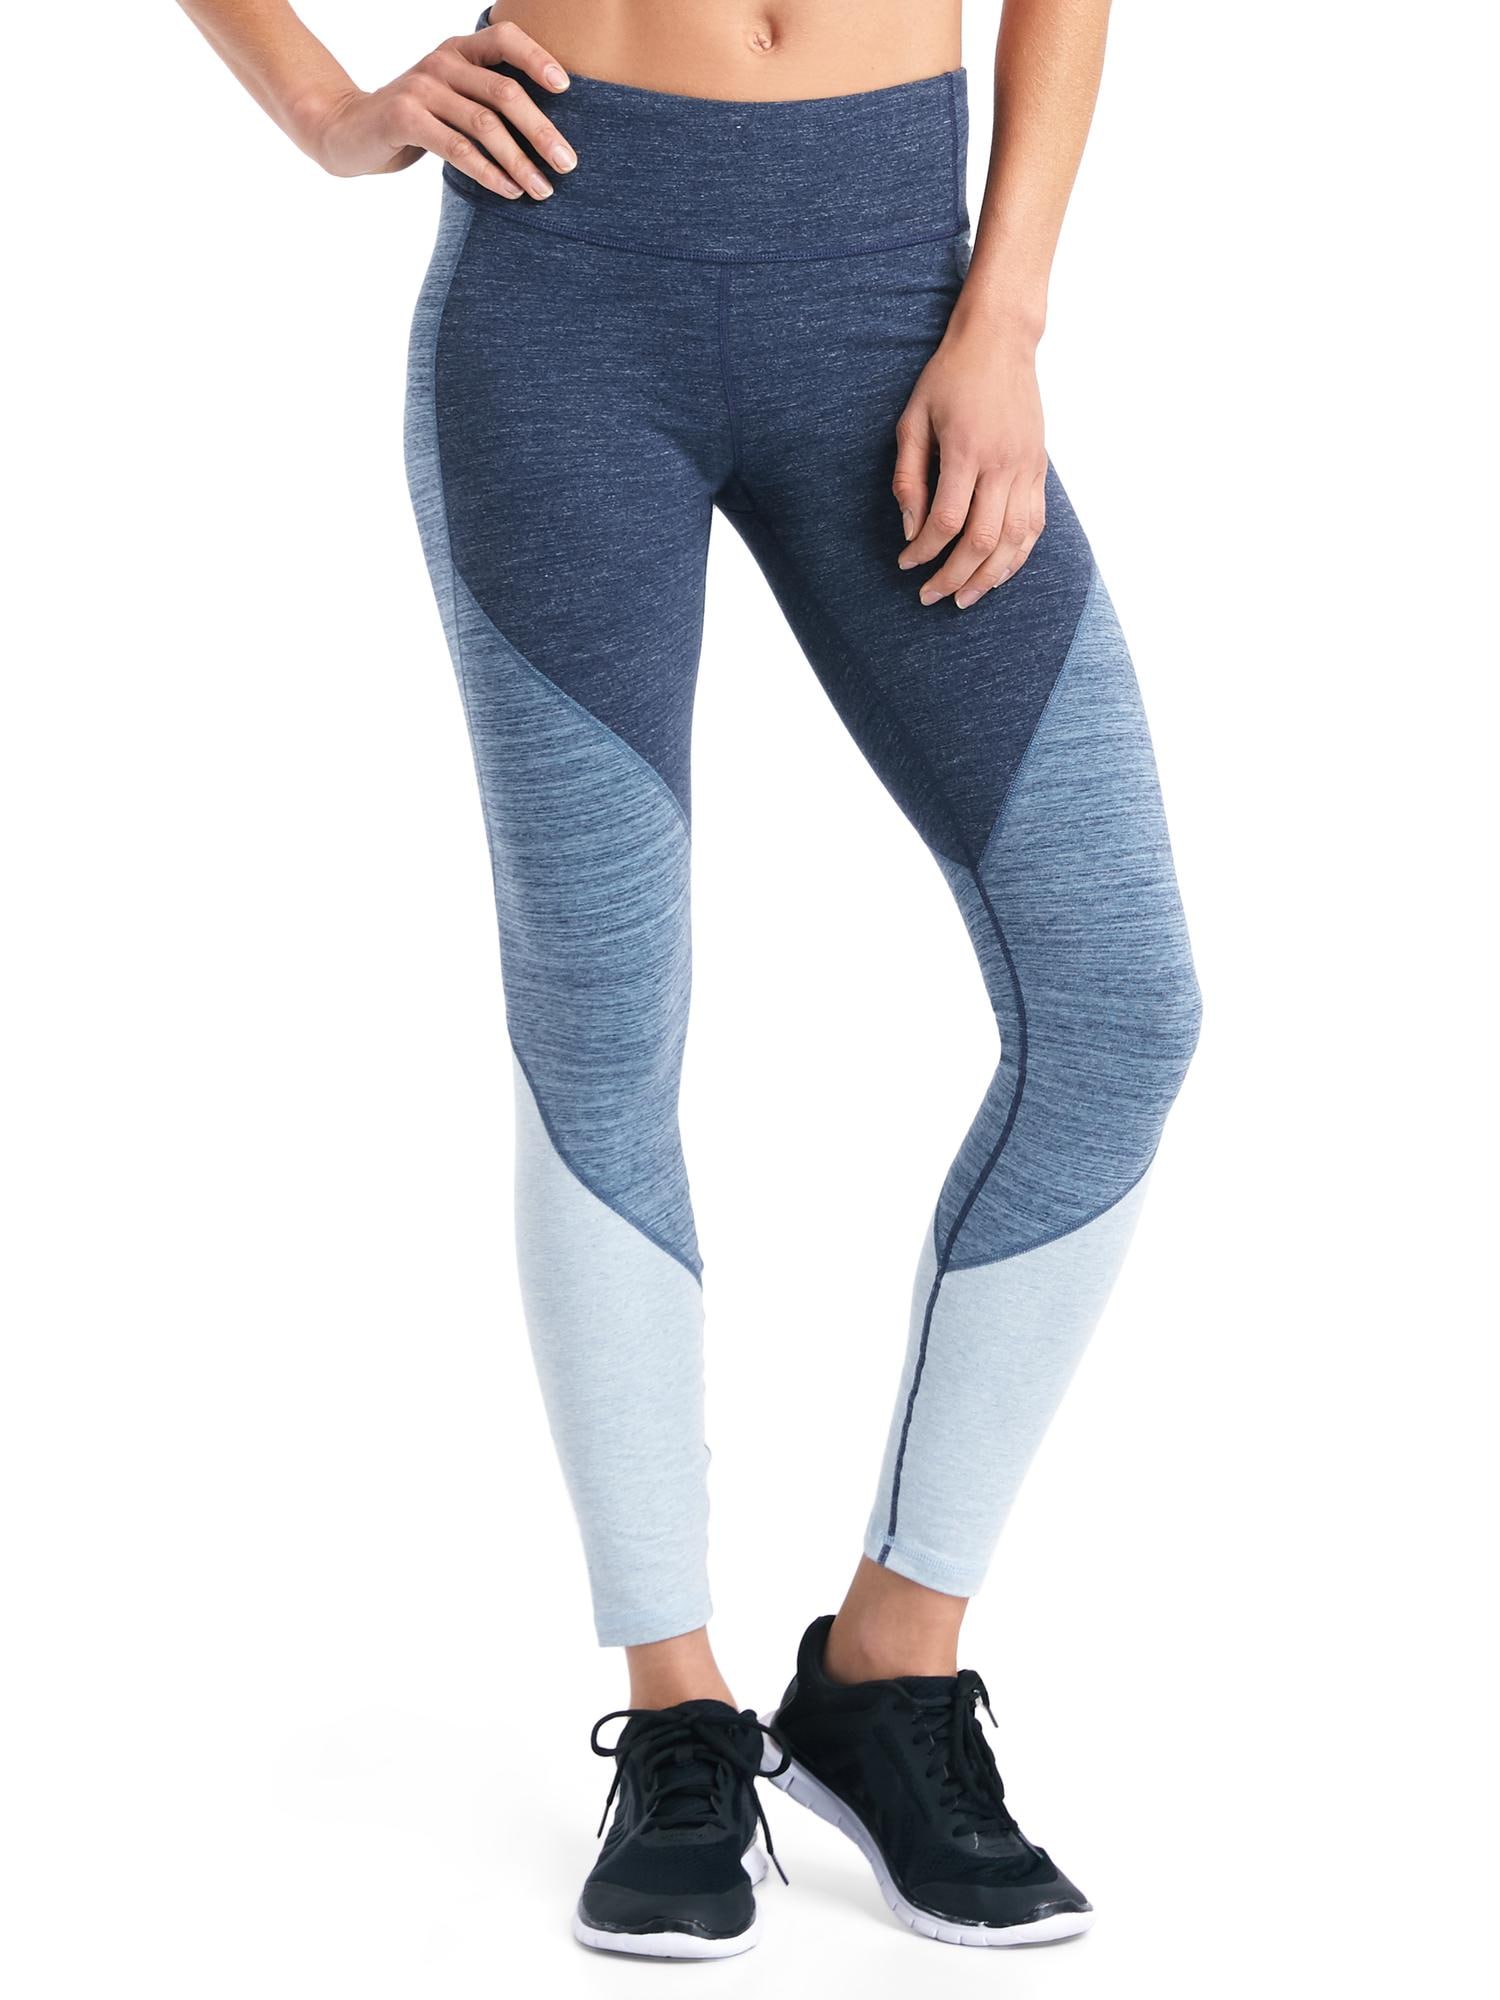 Size XS Lucy powermax, cropped yoga pant  Cropped yoga pants, Yoga pants,  Clothes design